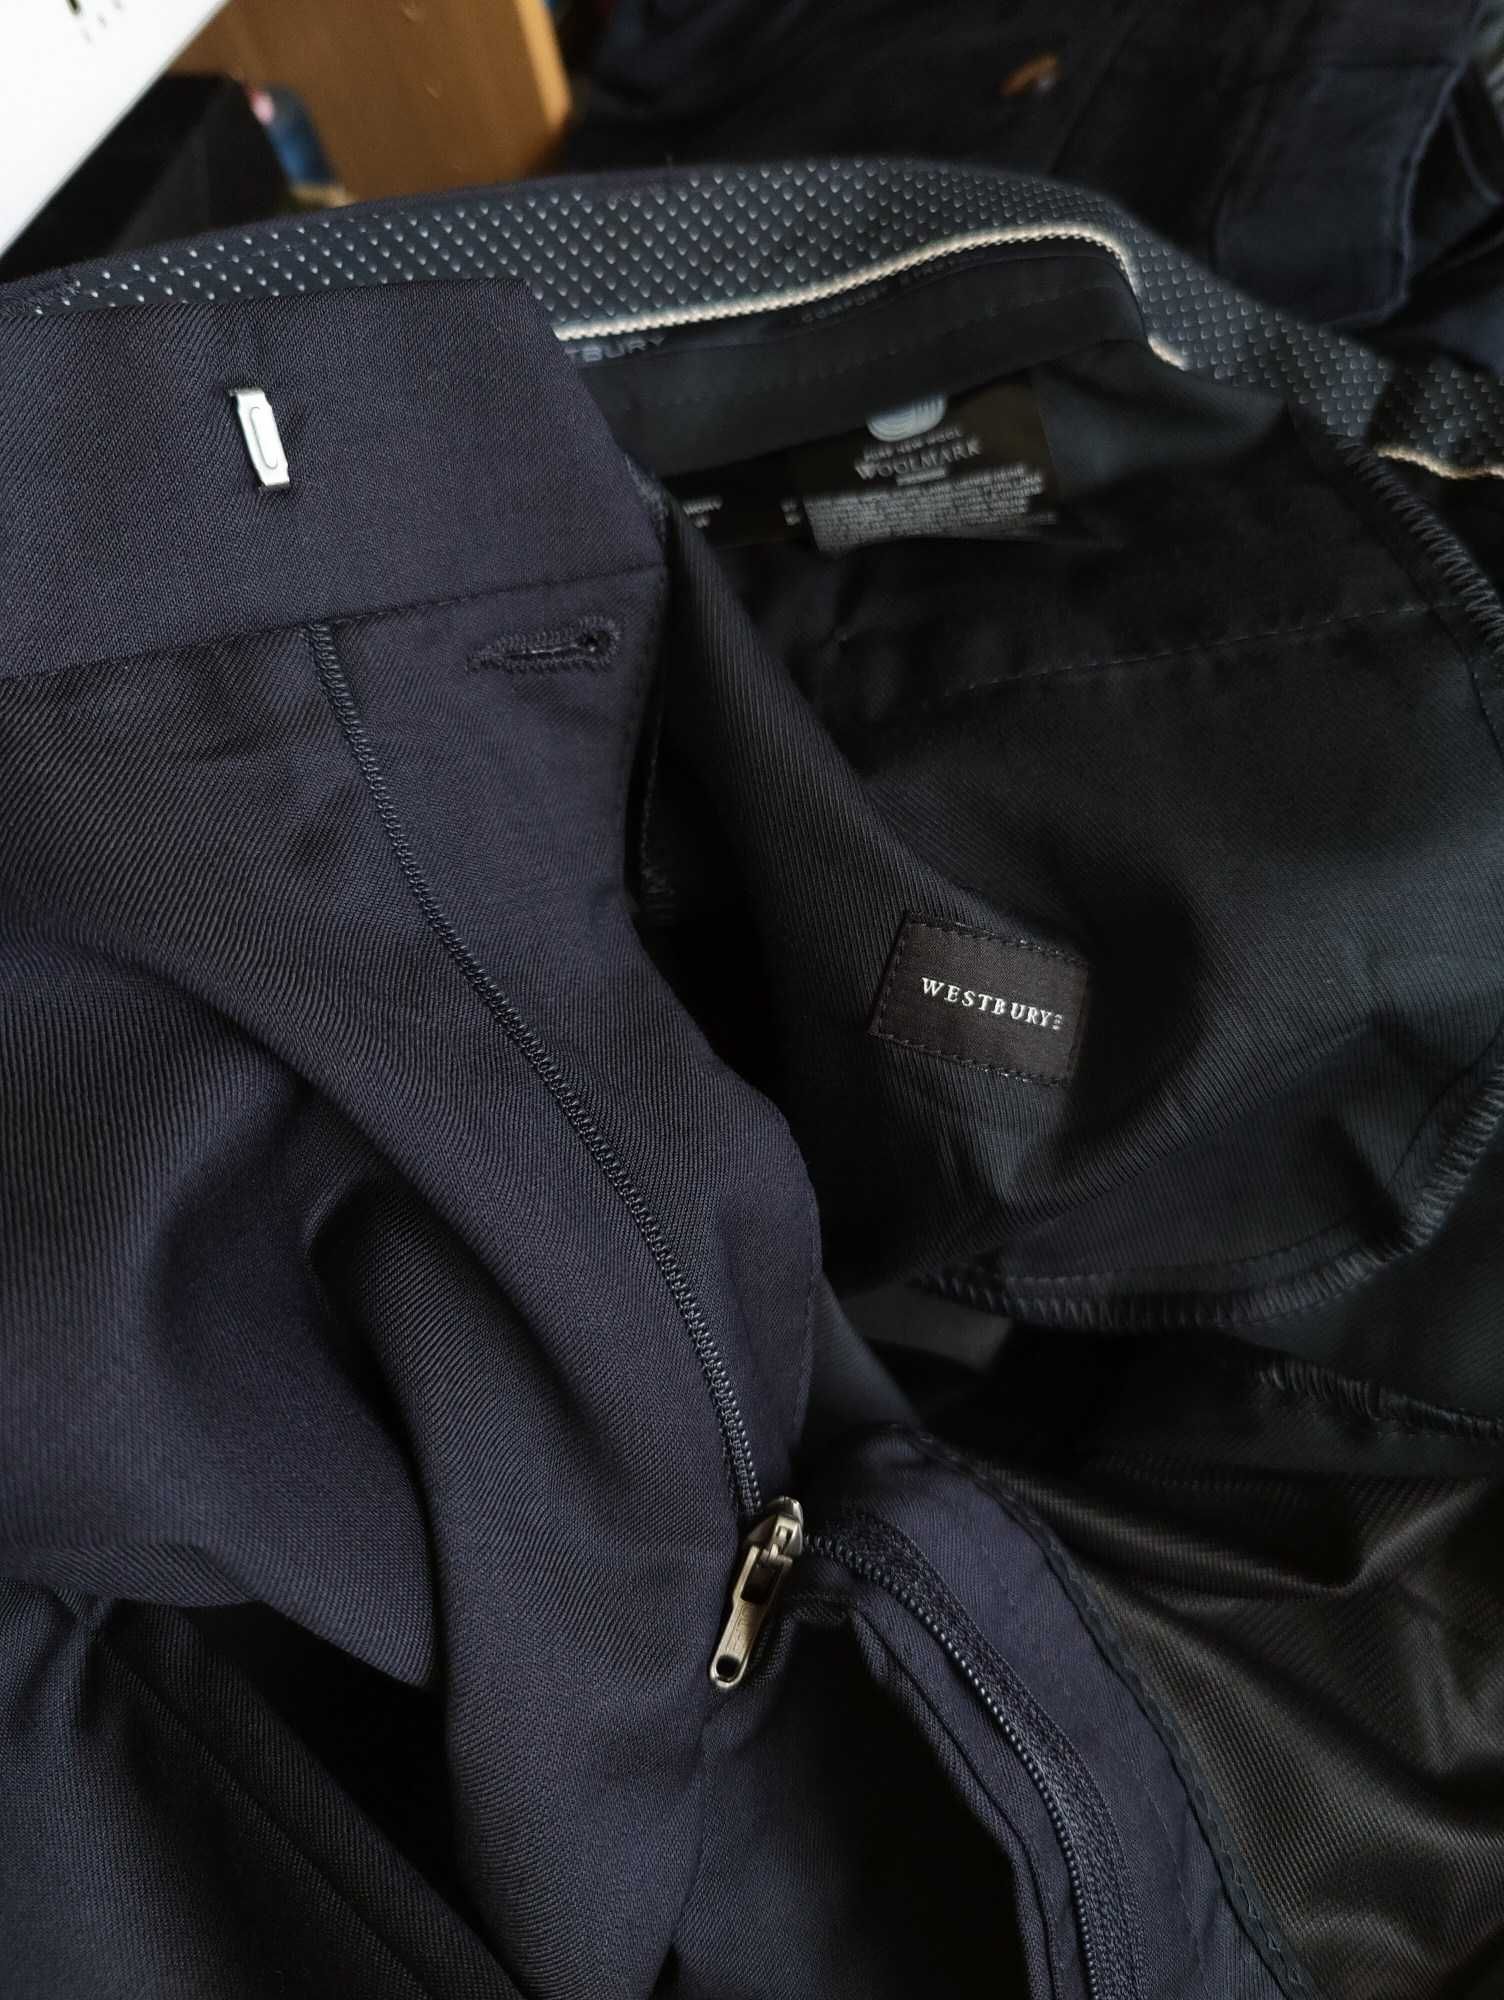 Джинсы брюки Marzotto wool trousers by Westbury Germany w40 navy.